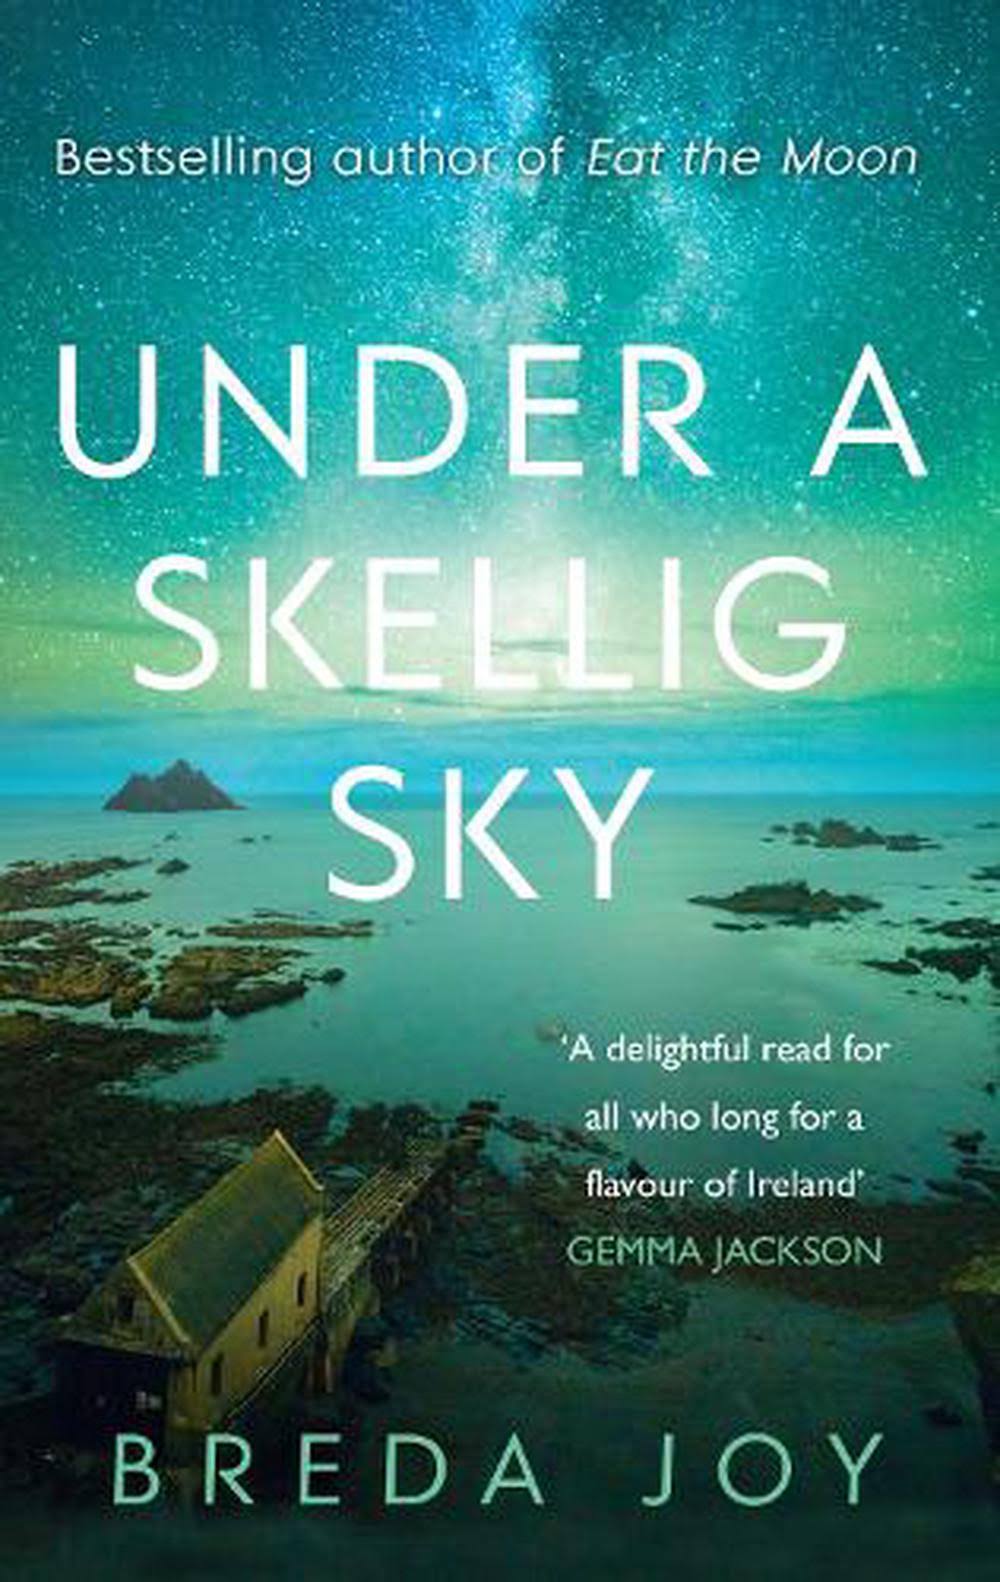 Under A Skellig Sky by Breda Joy